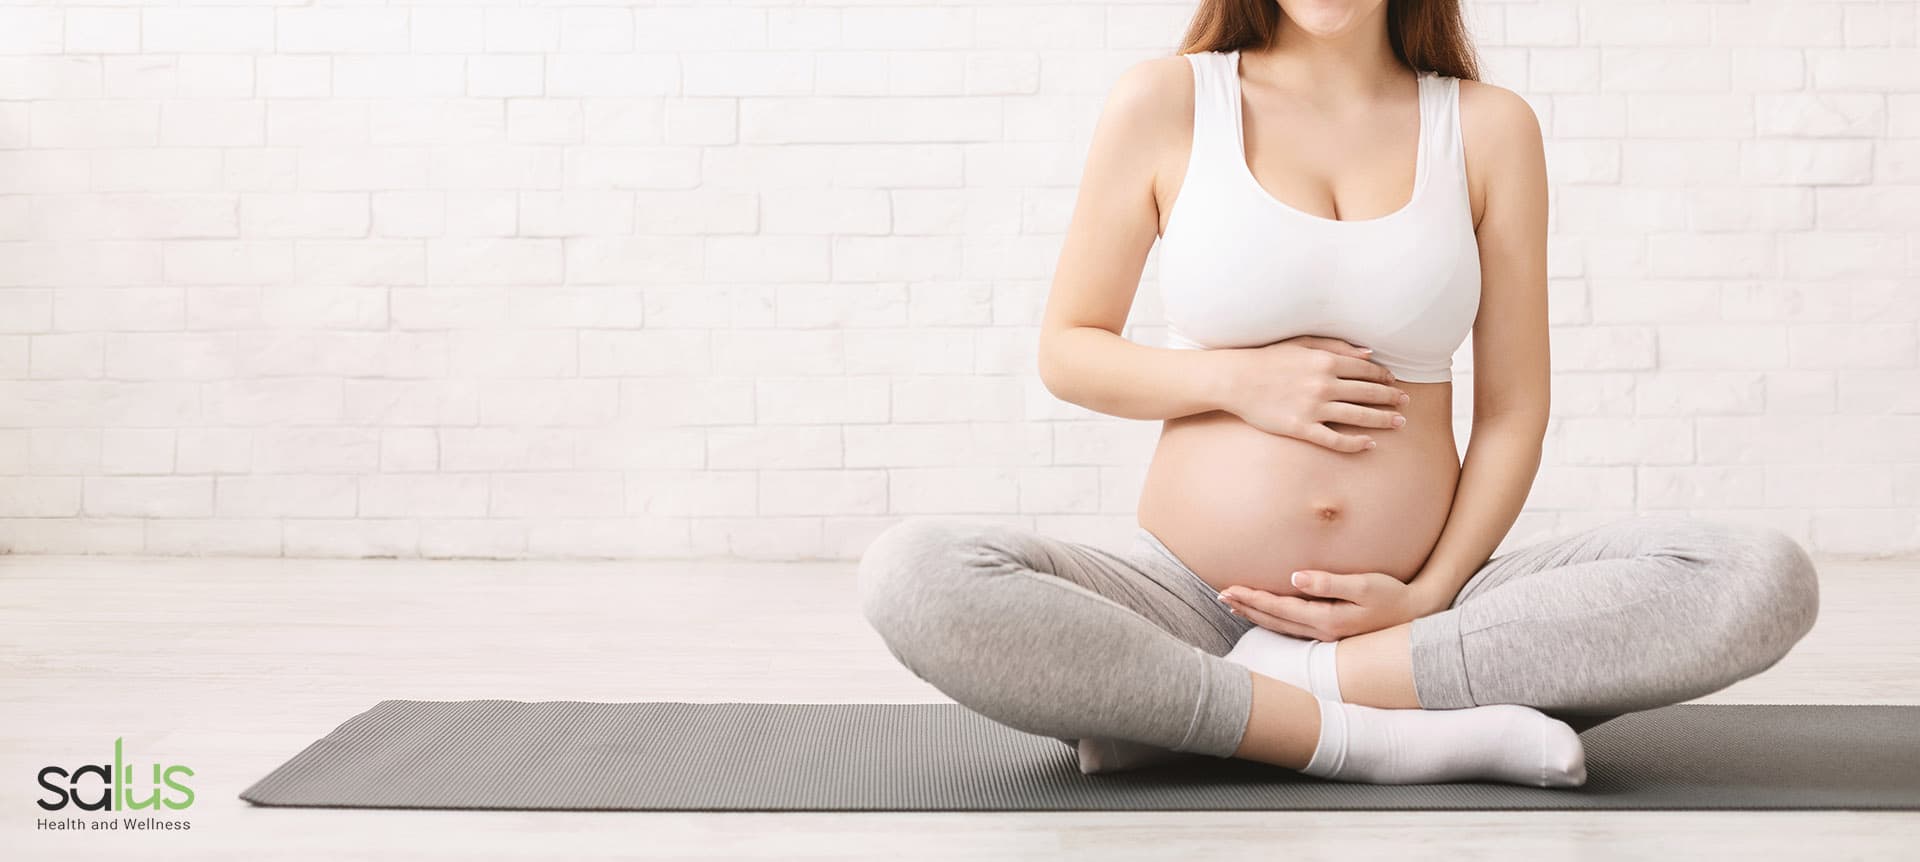 Salus blog sport consigliati gravidanza